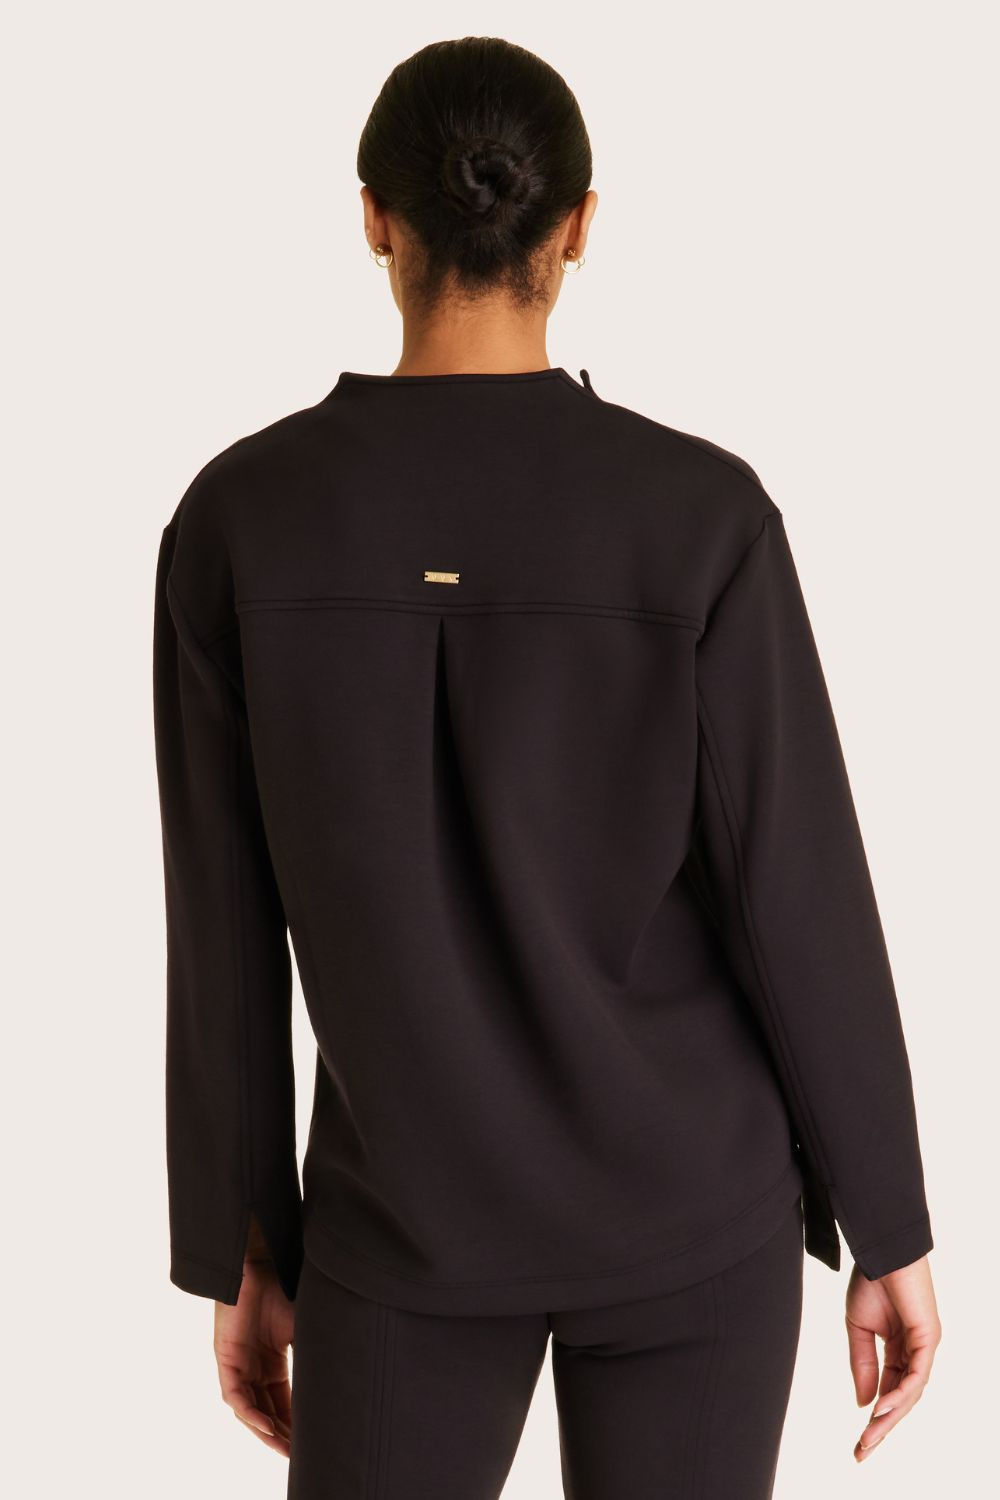 Alala women's v-neck sweatshirt in black